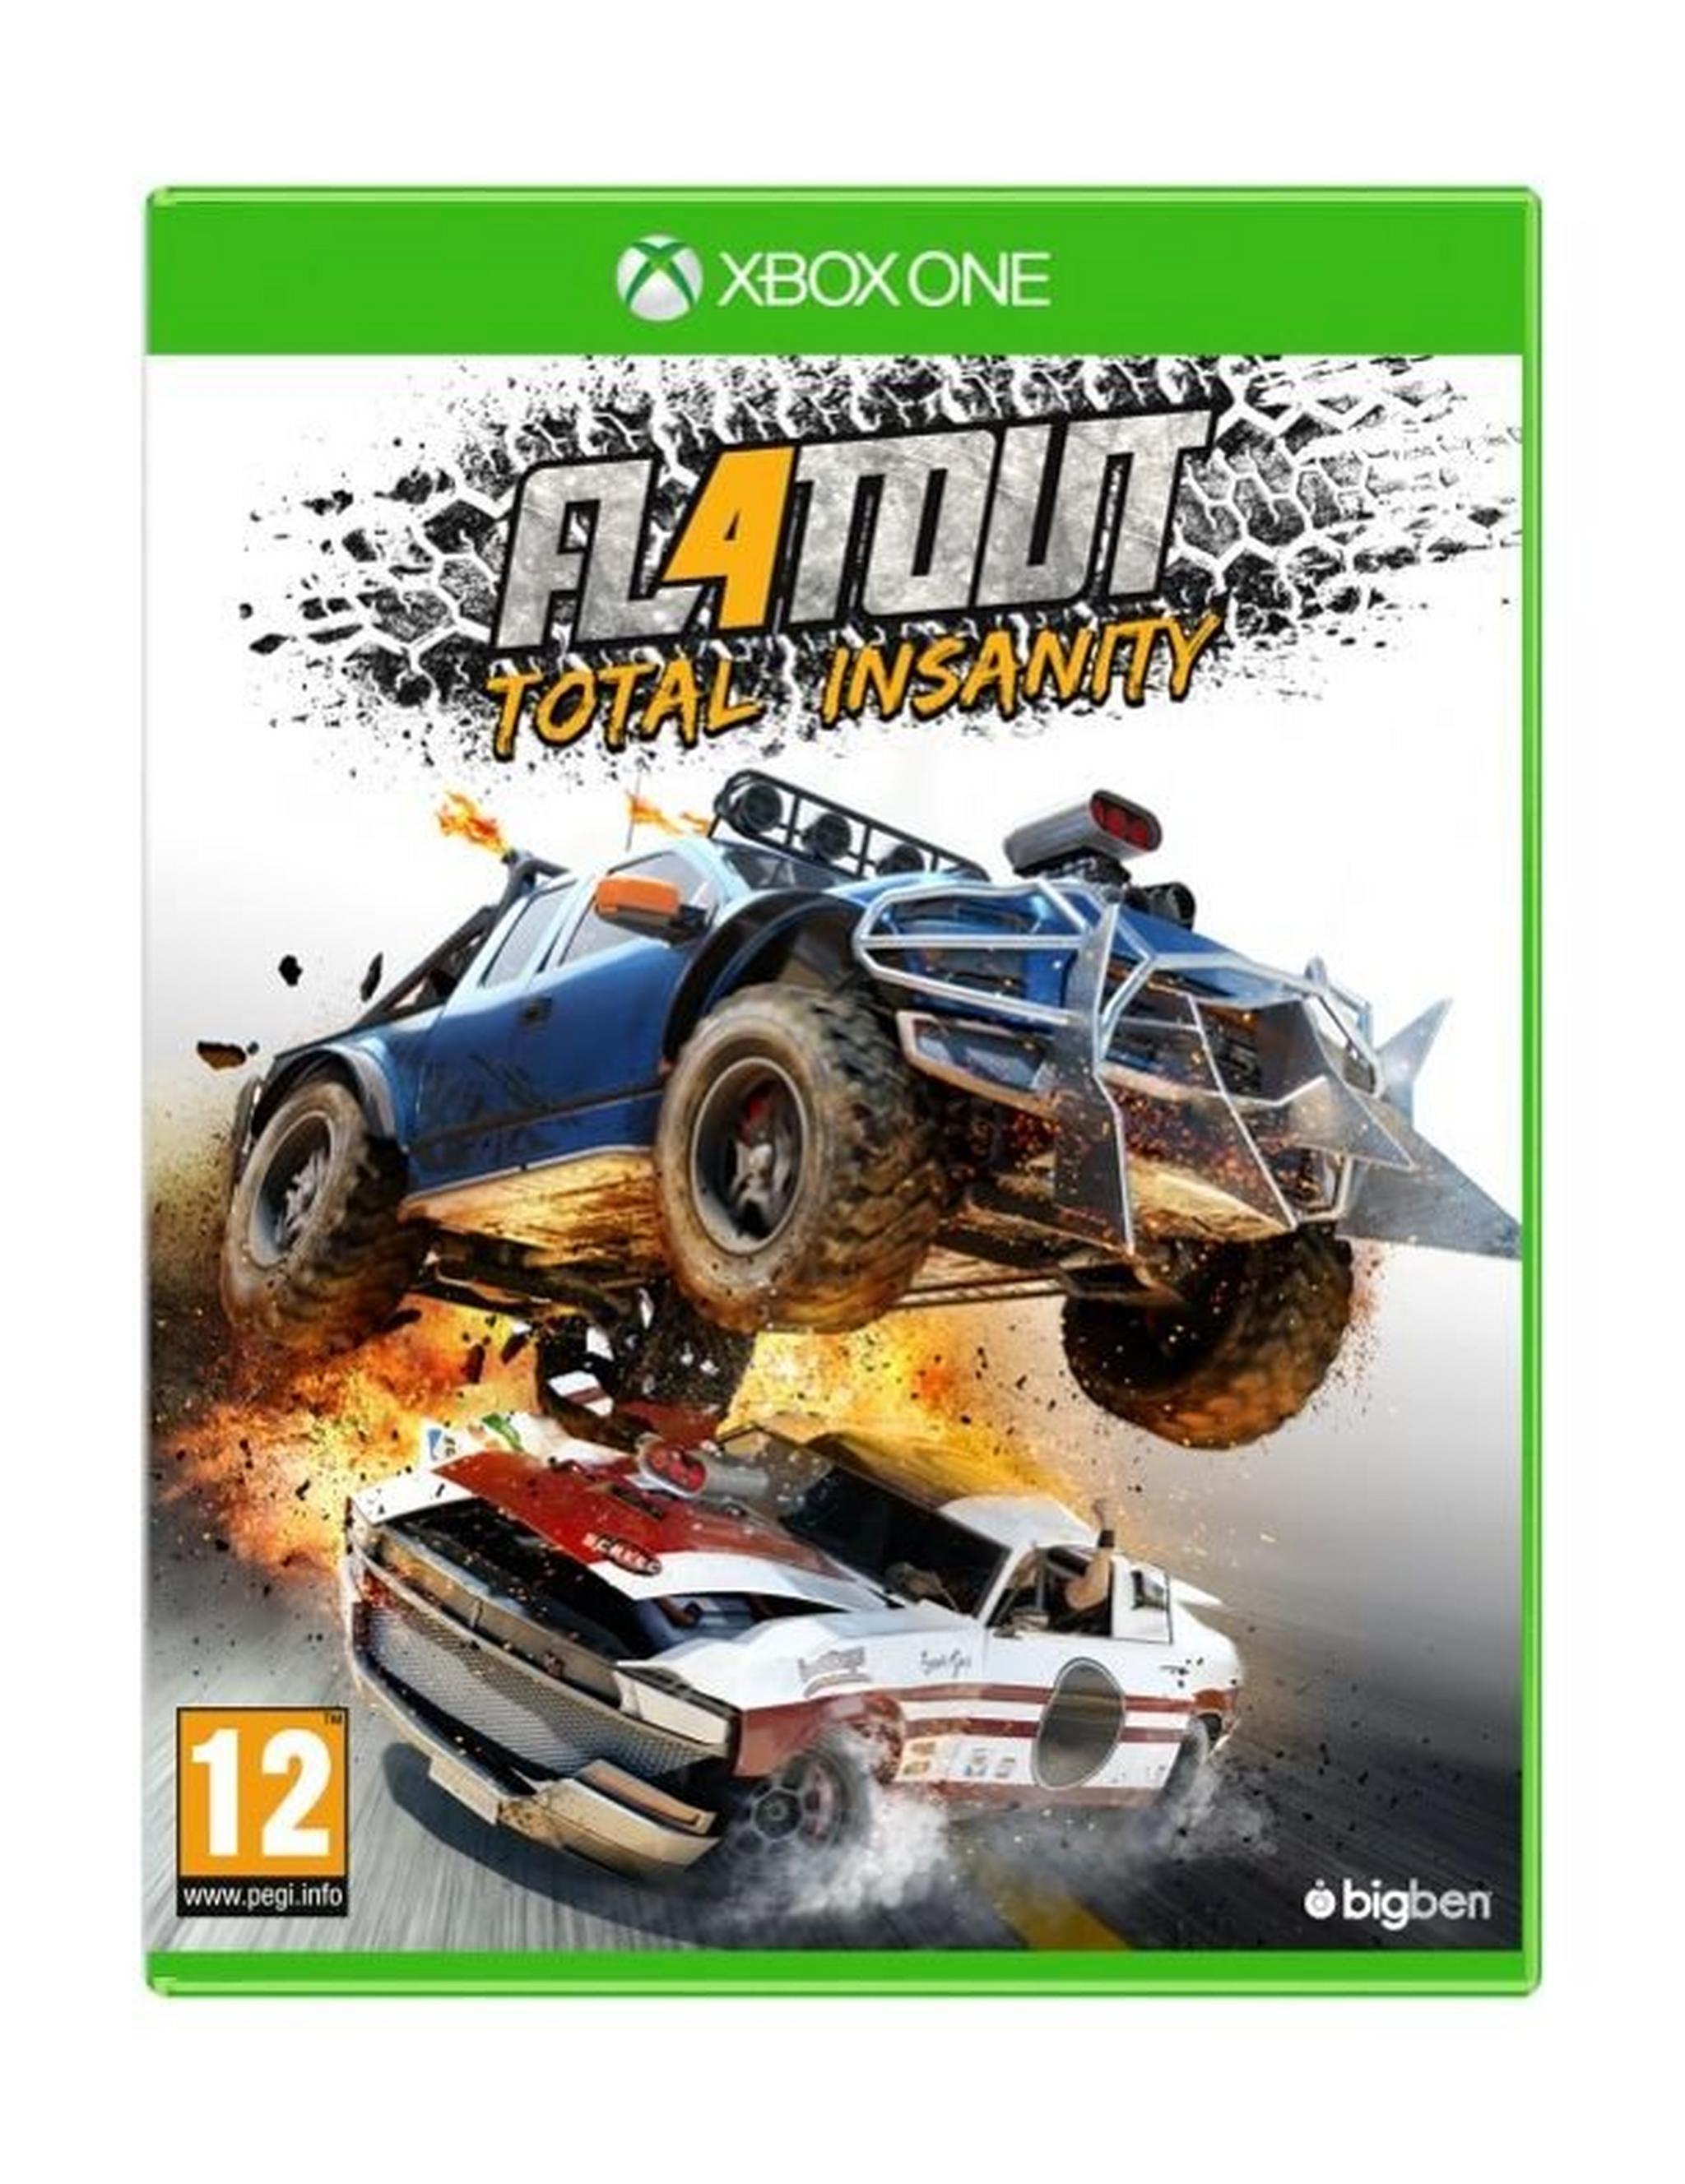 Flatout 4: Total Insanity – Xbox One Game